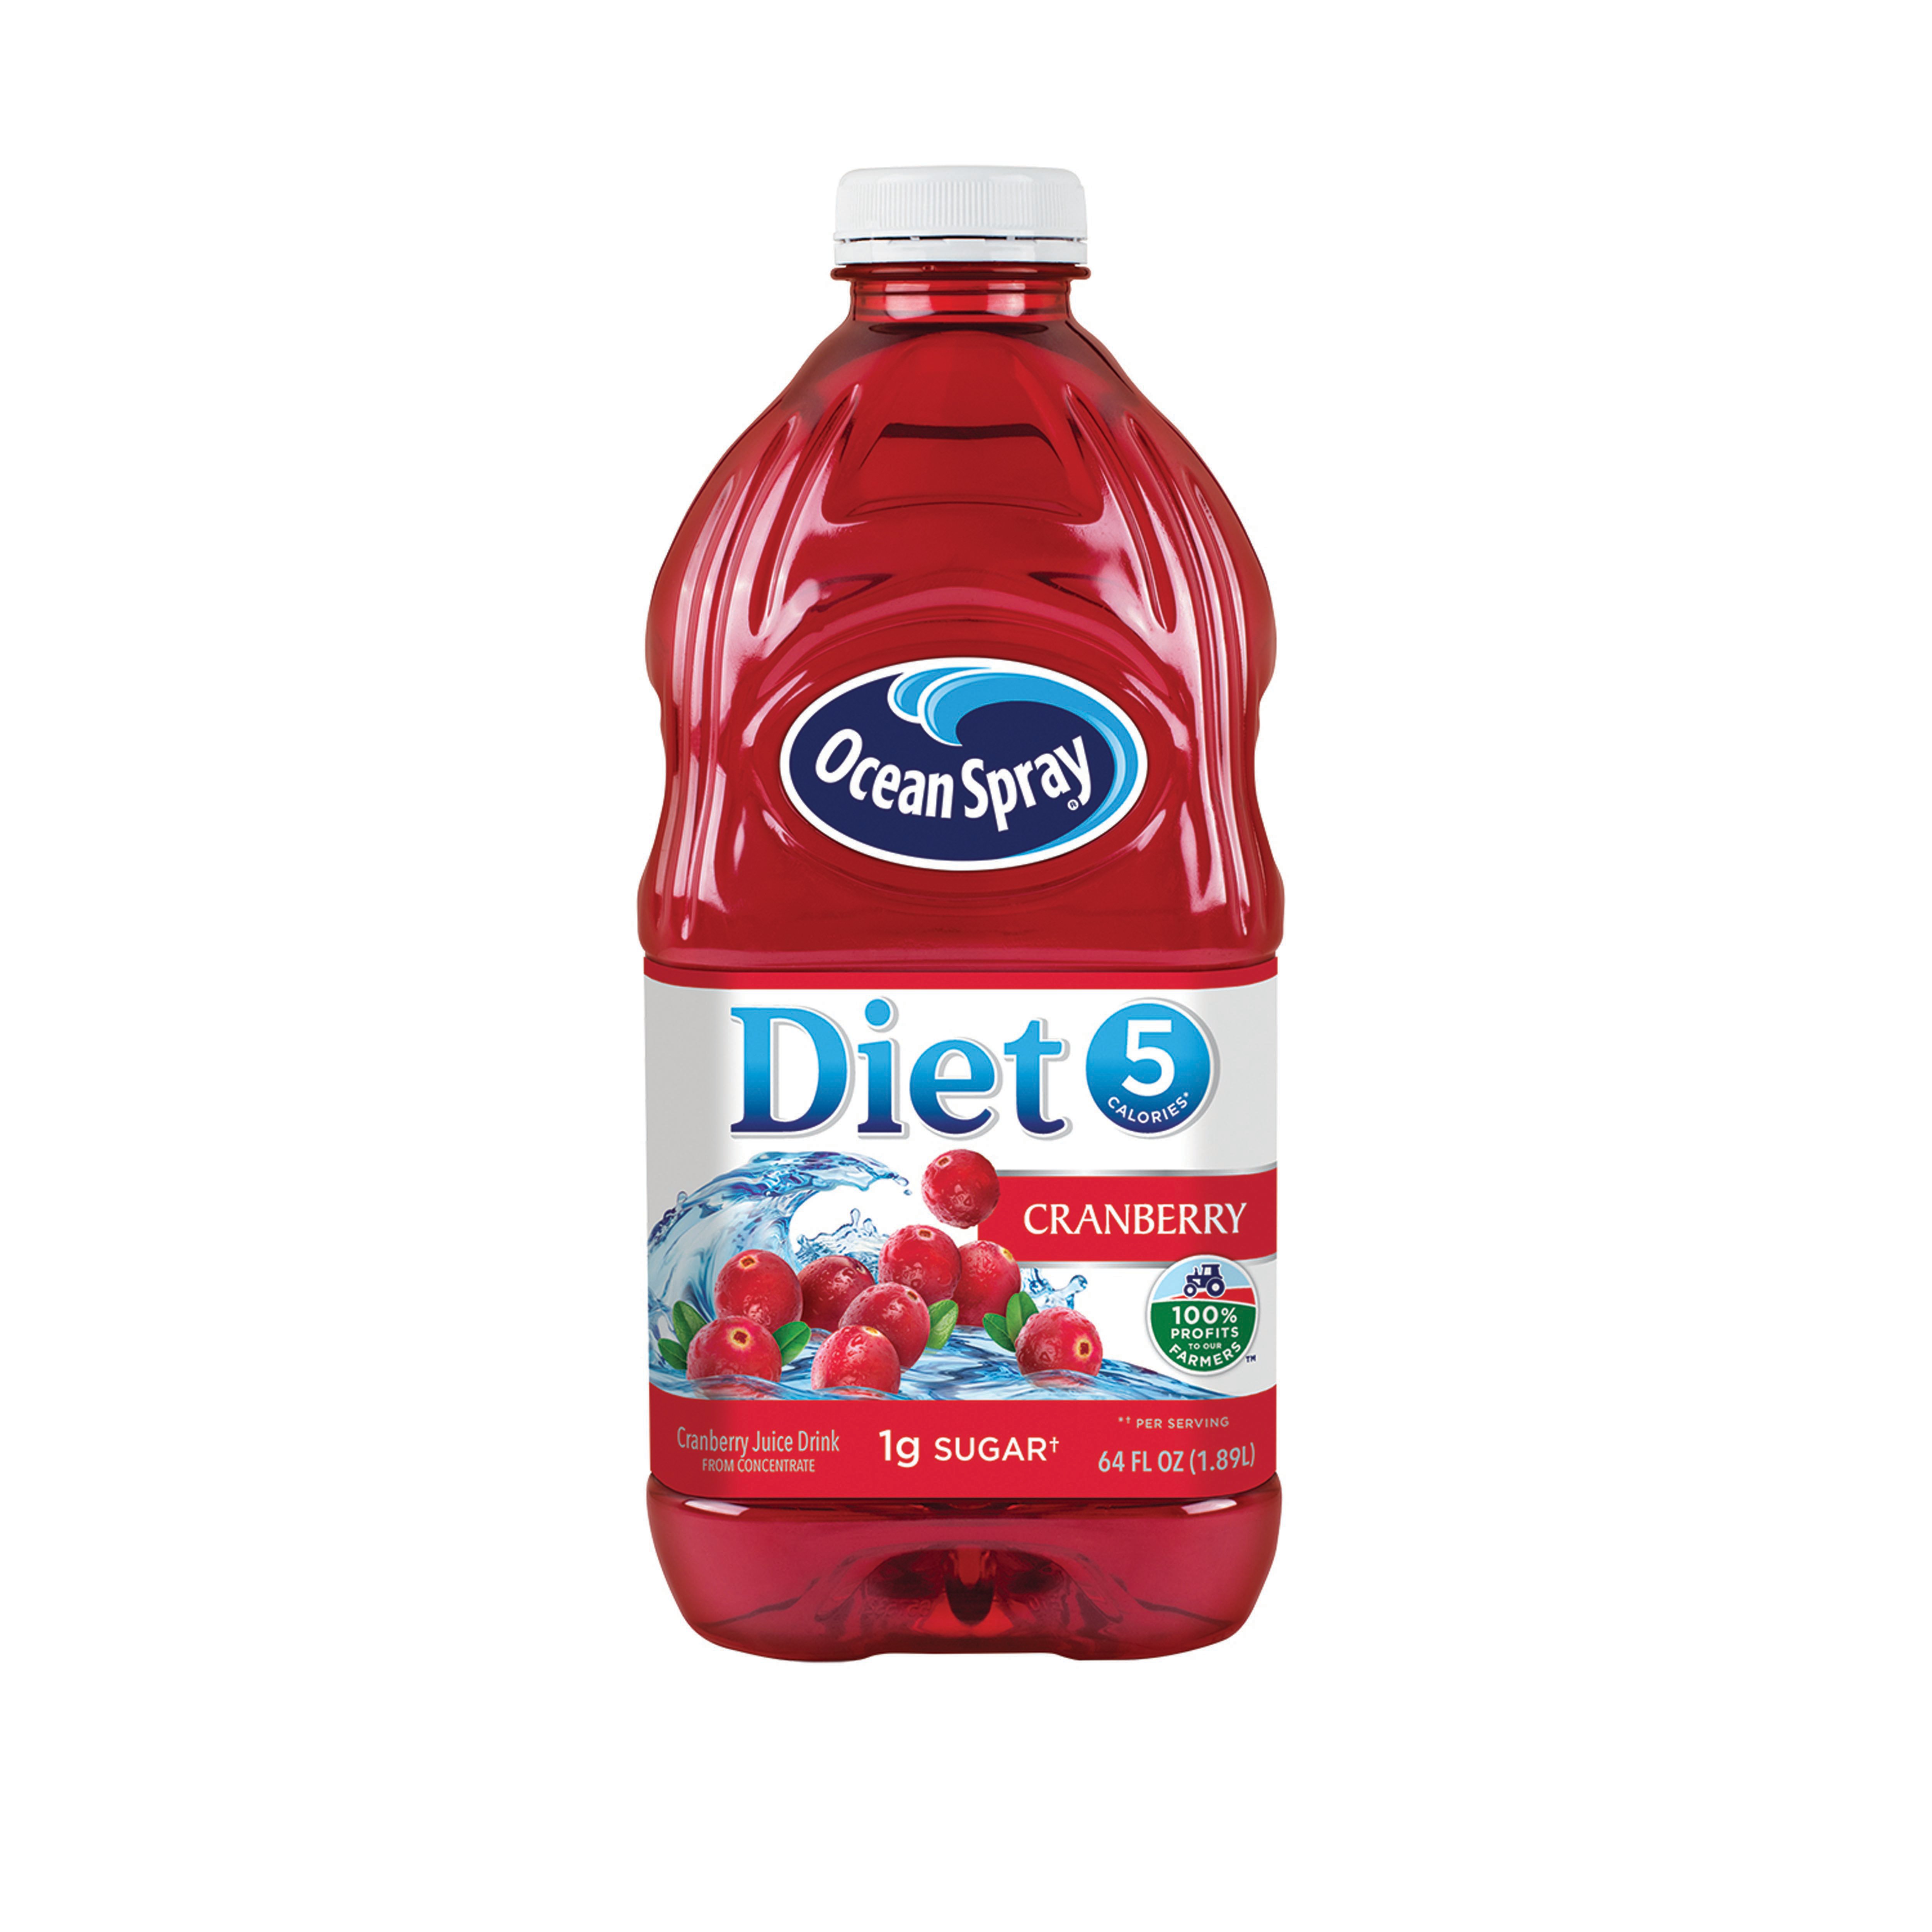 Ocean Spray Diet Cranberry Juice Drink Shop Juice at HEB